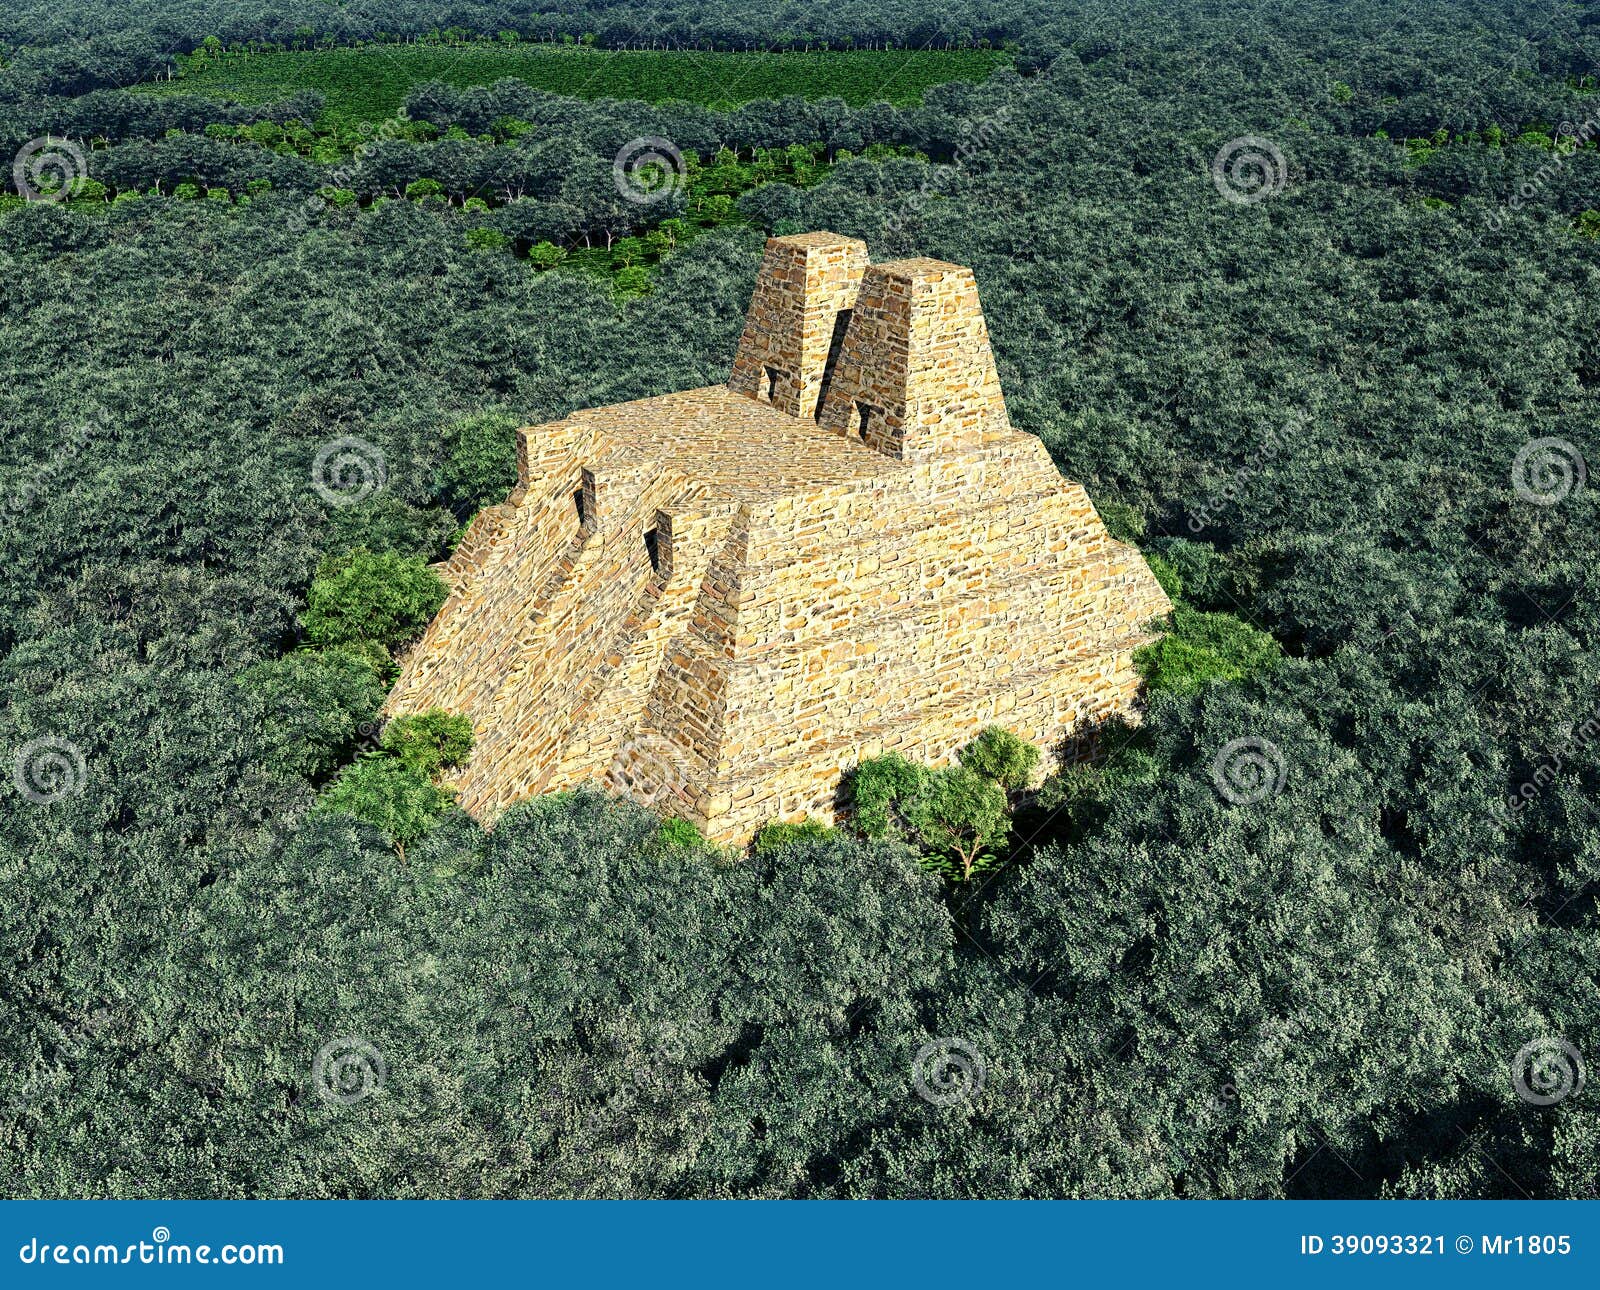 temple of the aztecs